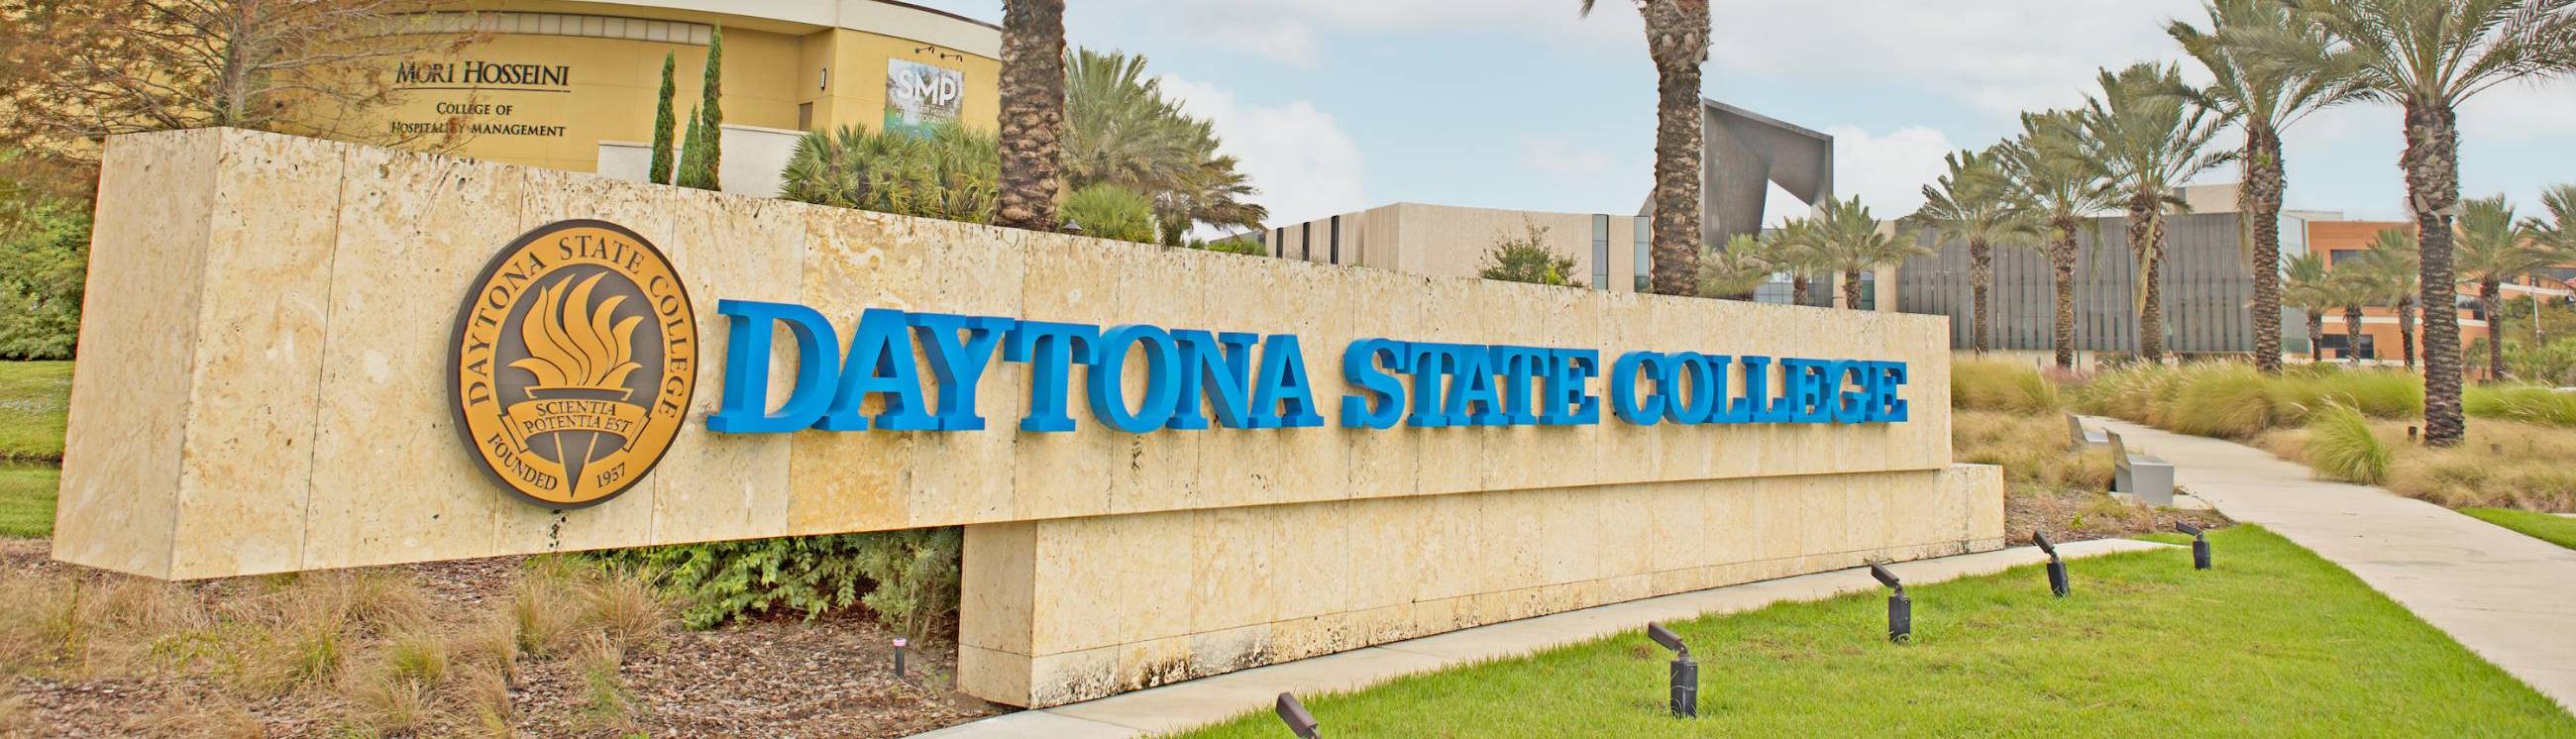 Daytona State College street sign at Daytona Beach campus